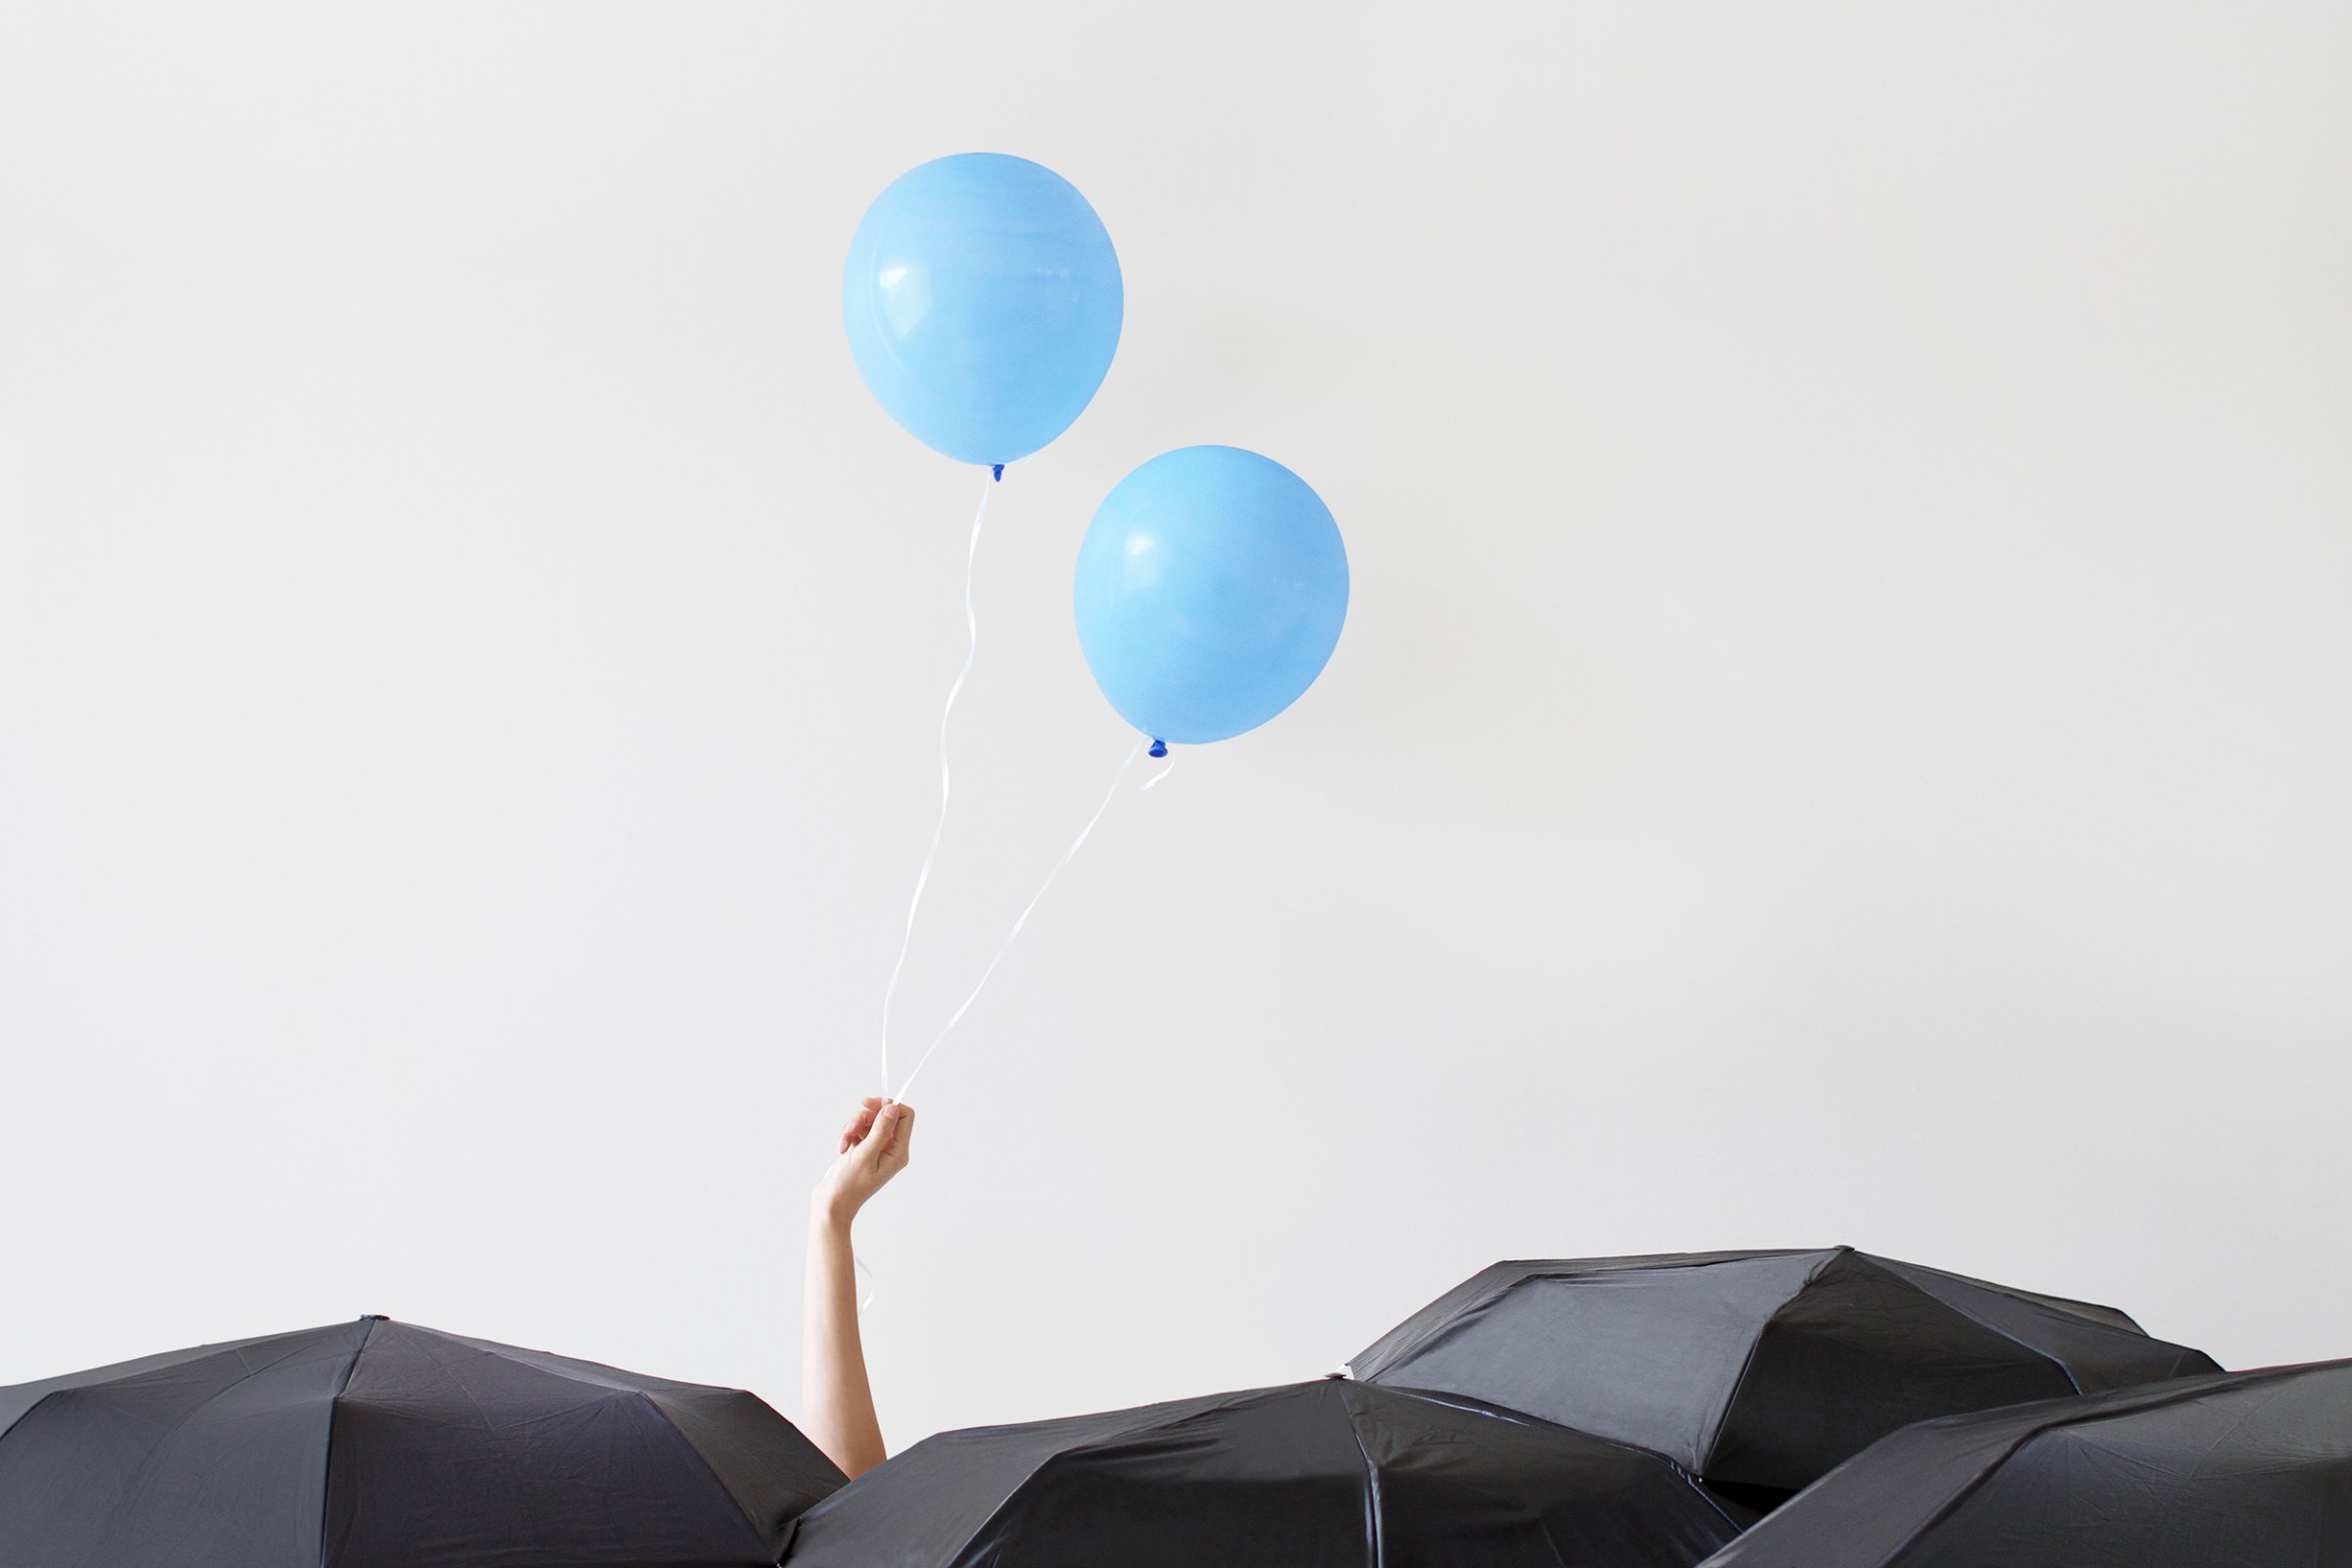 umbrellas ballons mental health self betterment happiness motto stock